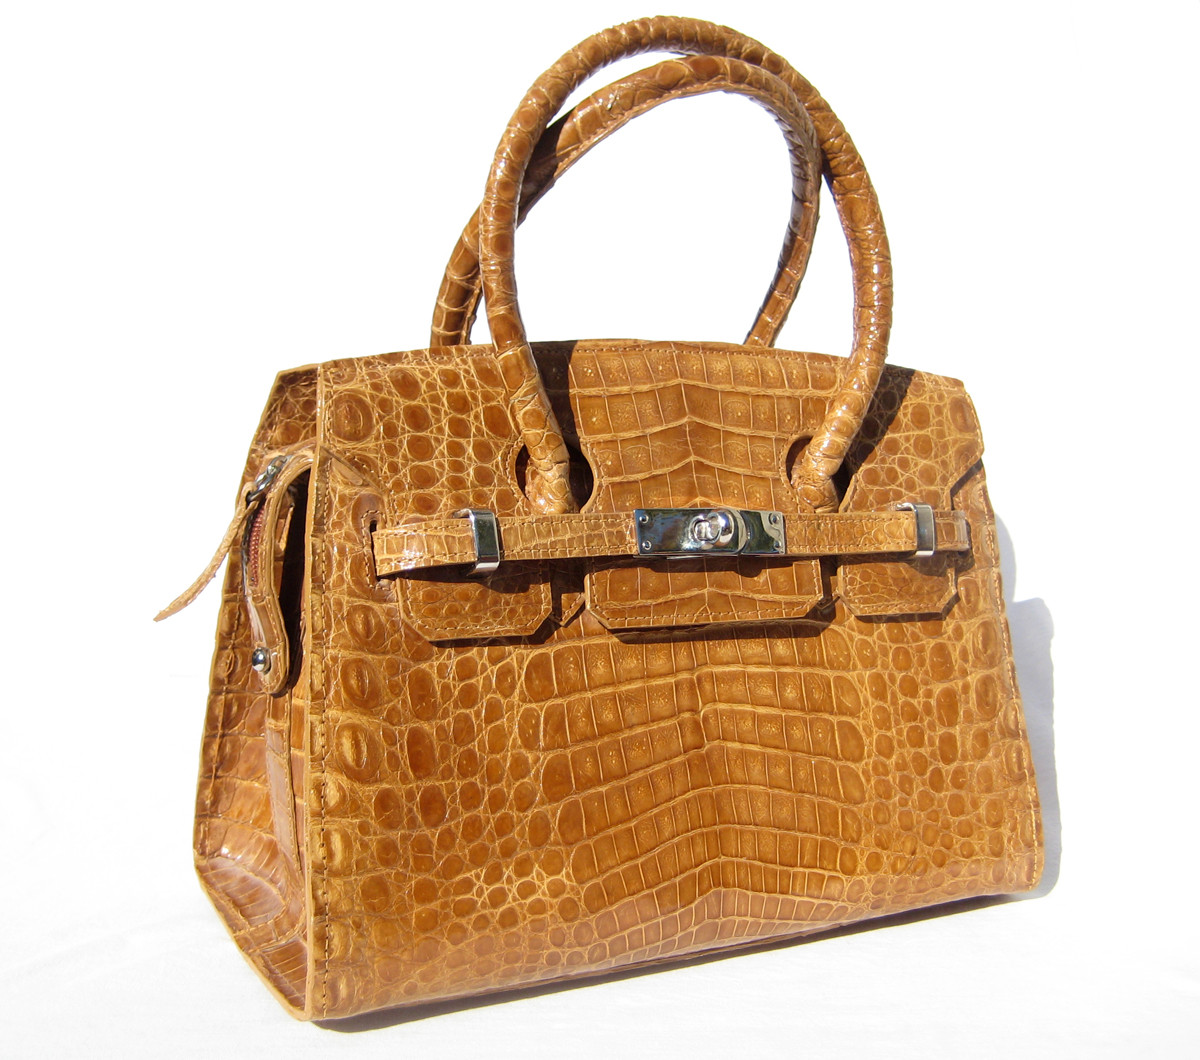 British TAN Crocodile Belly Skin BIRKIN Bag SATCHEL Bag - HERMES Style -  ITALY - Vintage Skins